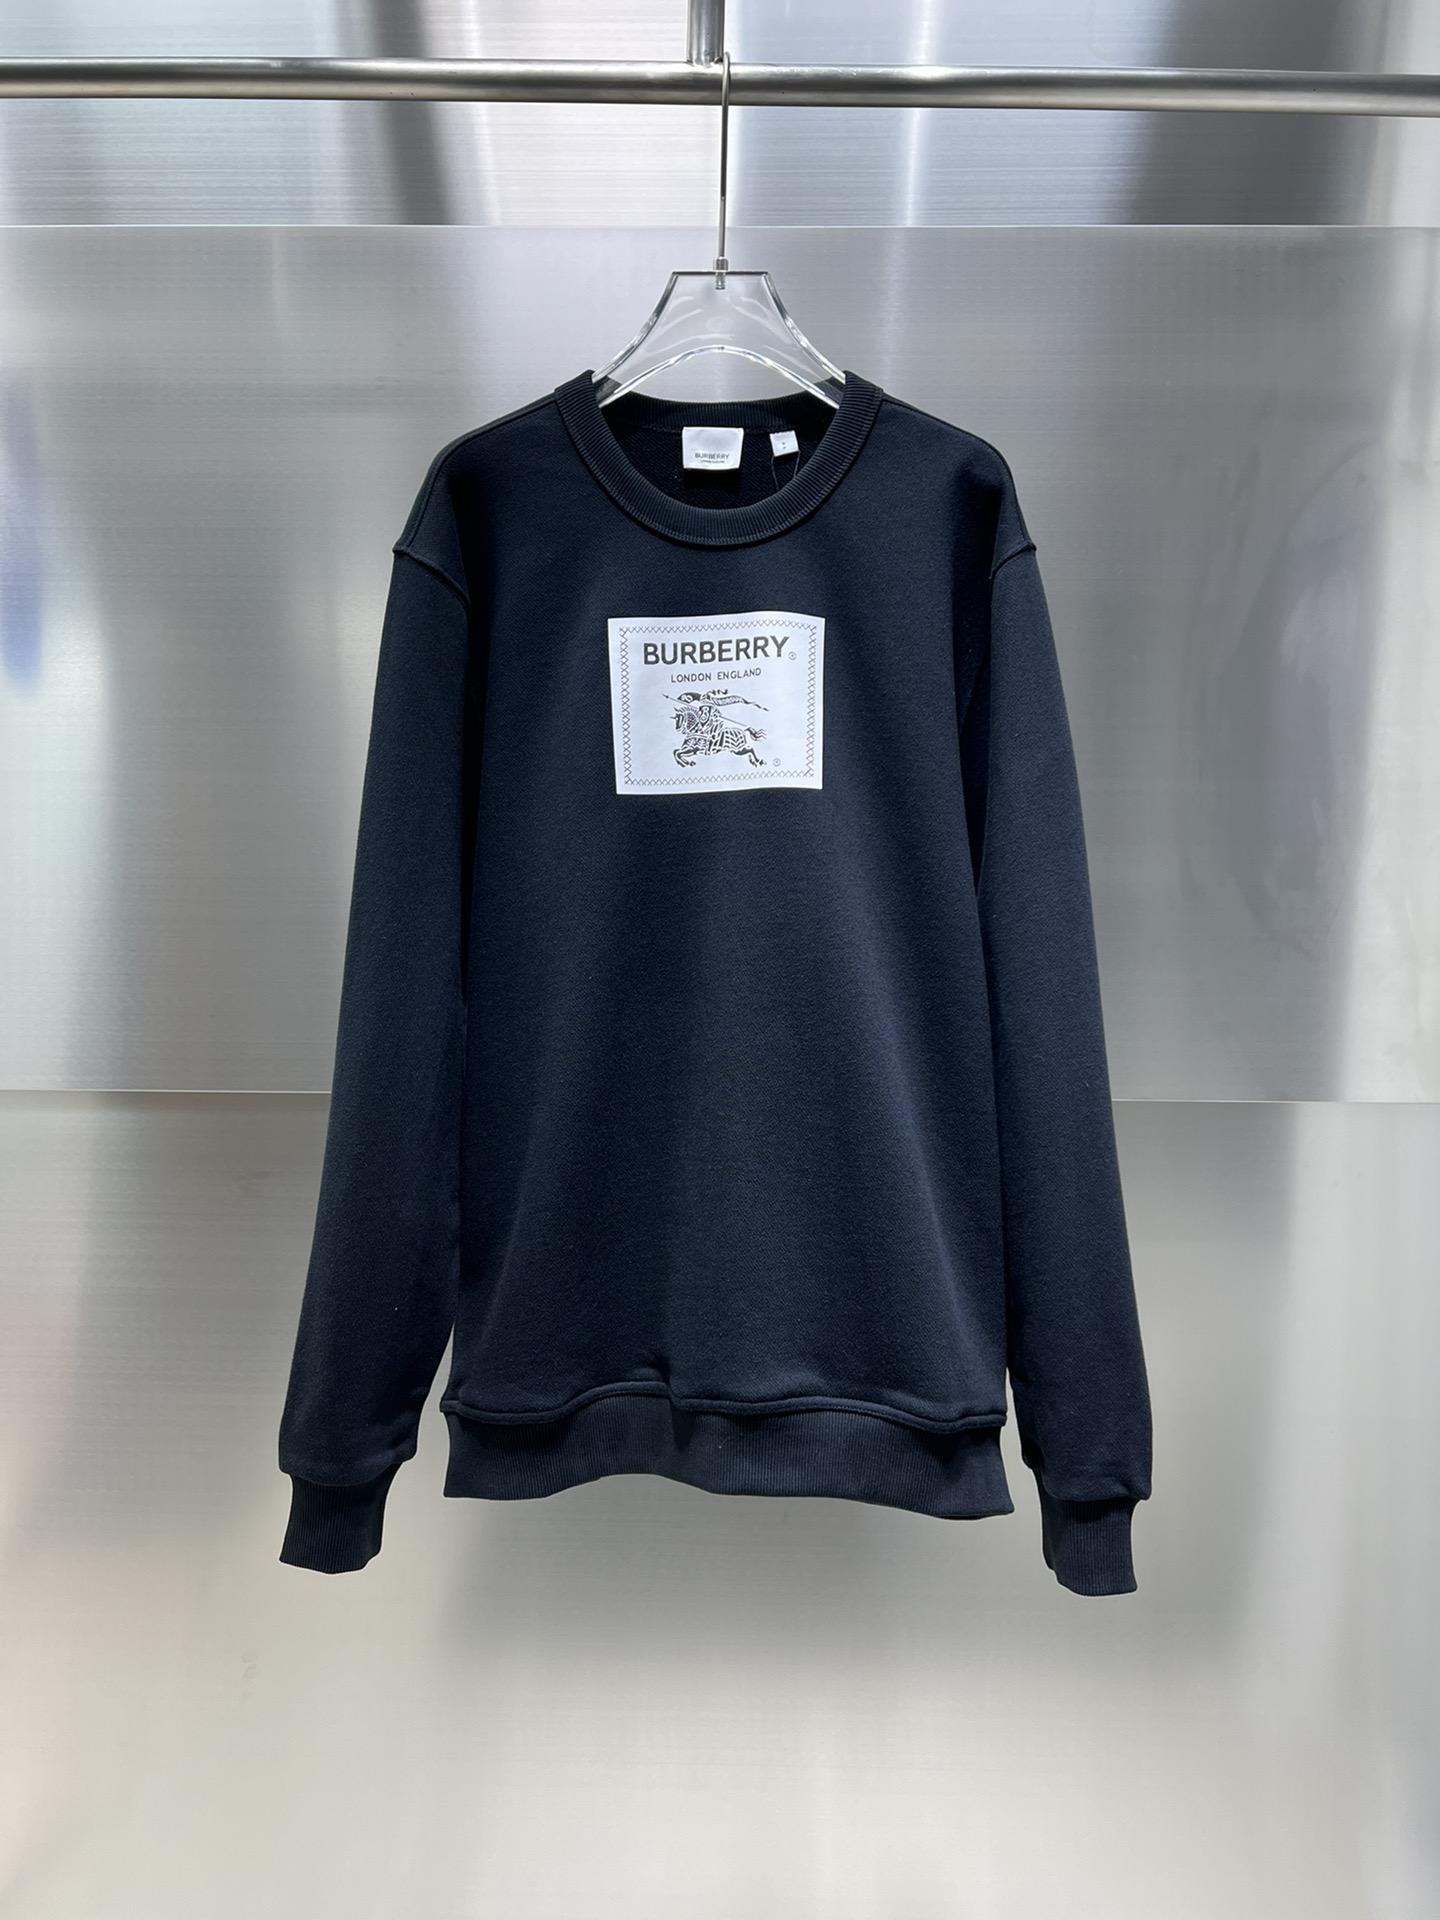 prorsum-label-cotton-sweatshirt-4817_16845004102-1000